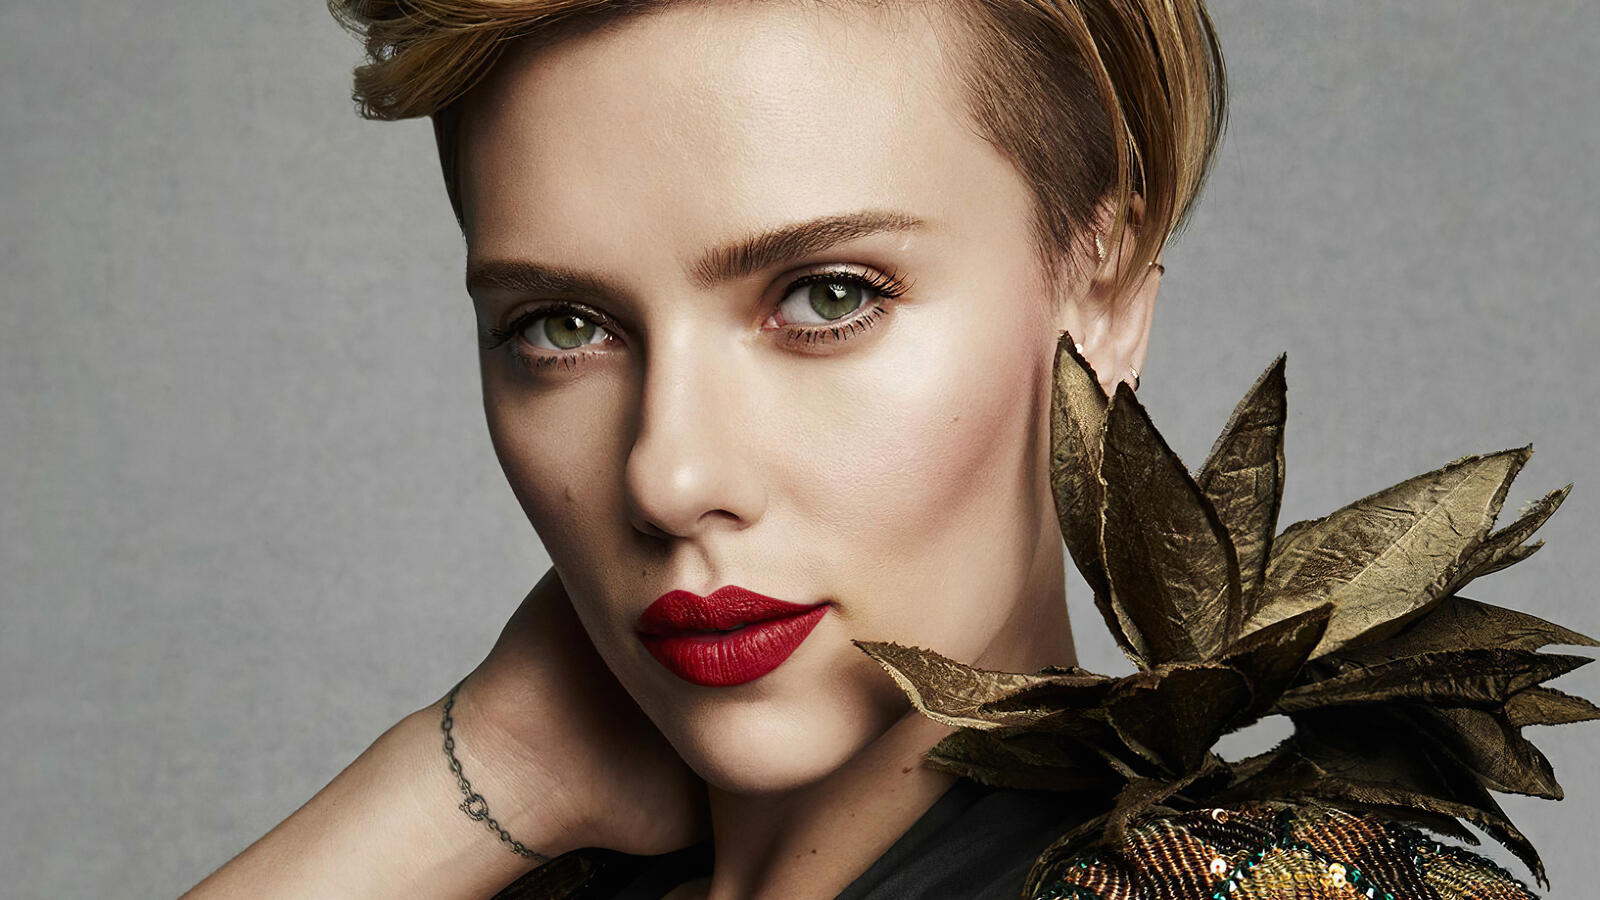 Wallpapers Scarlett Johansson make-up celebrities on the desktop